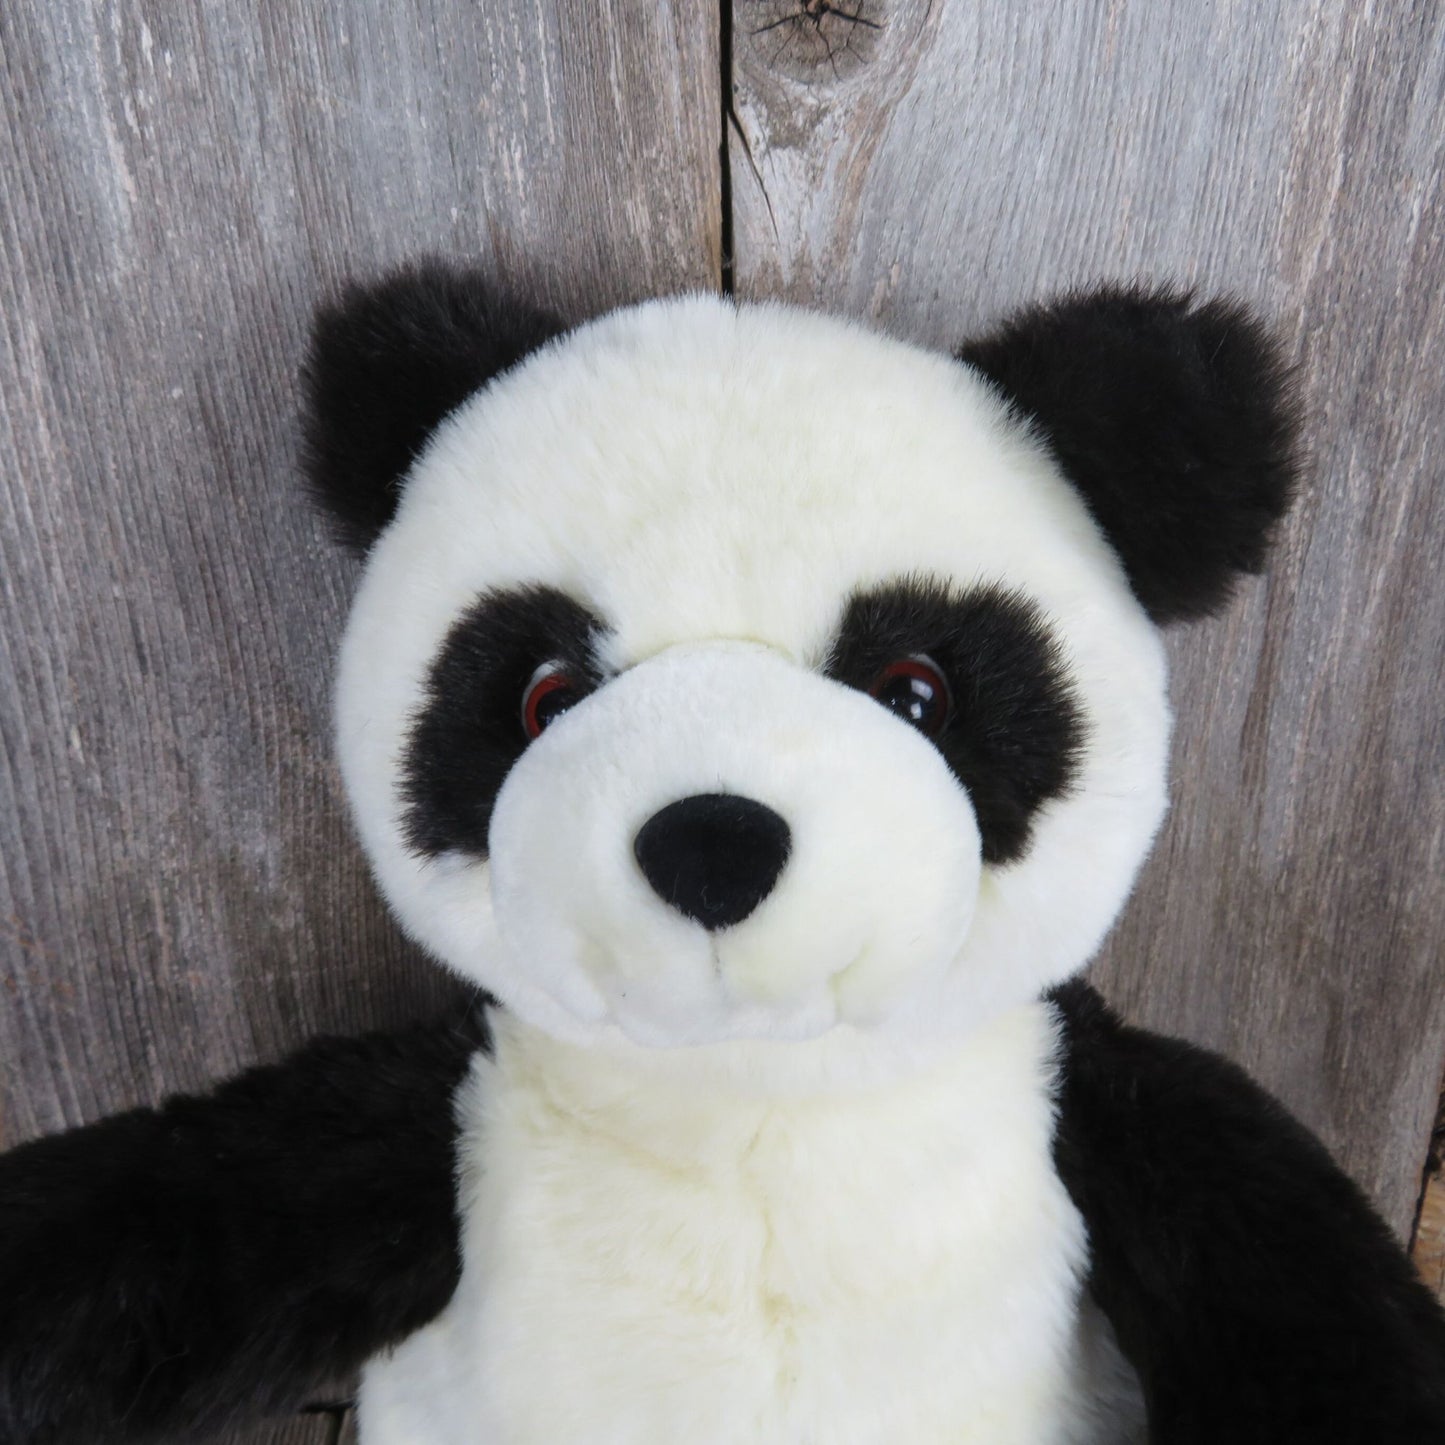 Vintage Panda Bear Plush Gund Stuffed Teddy Bear Black White 1990s